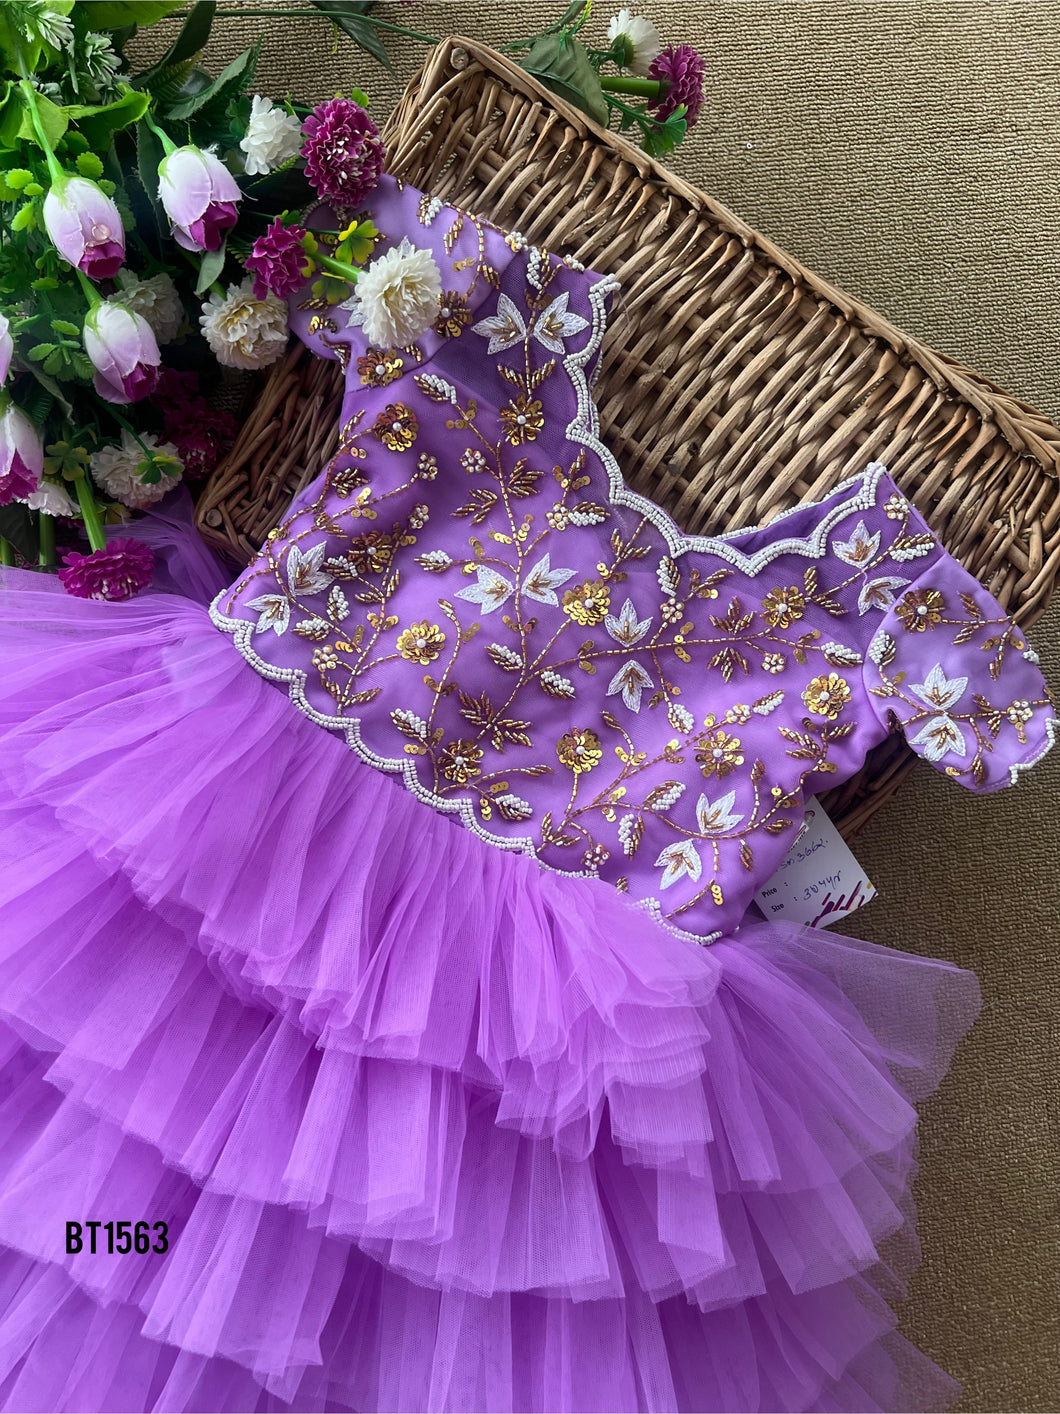 BT1563 Lavender Dreams: Majestic Garden Baby Gown